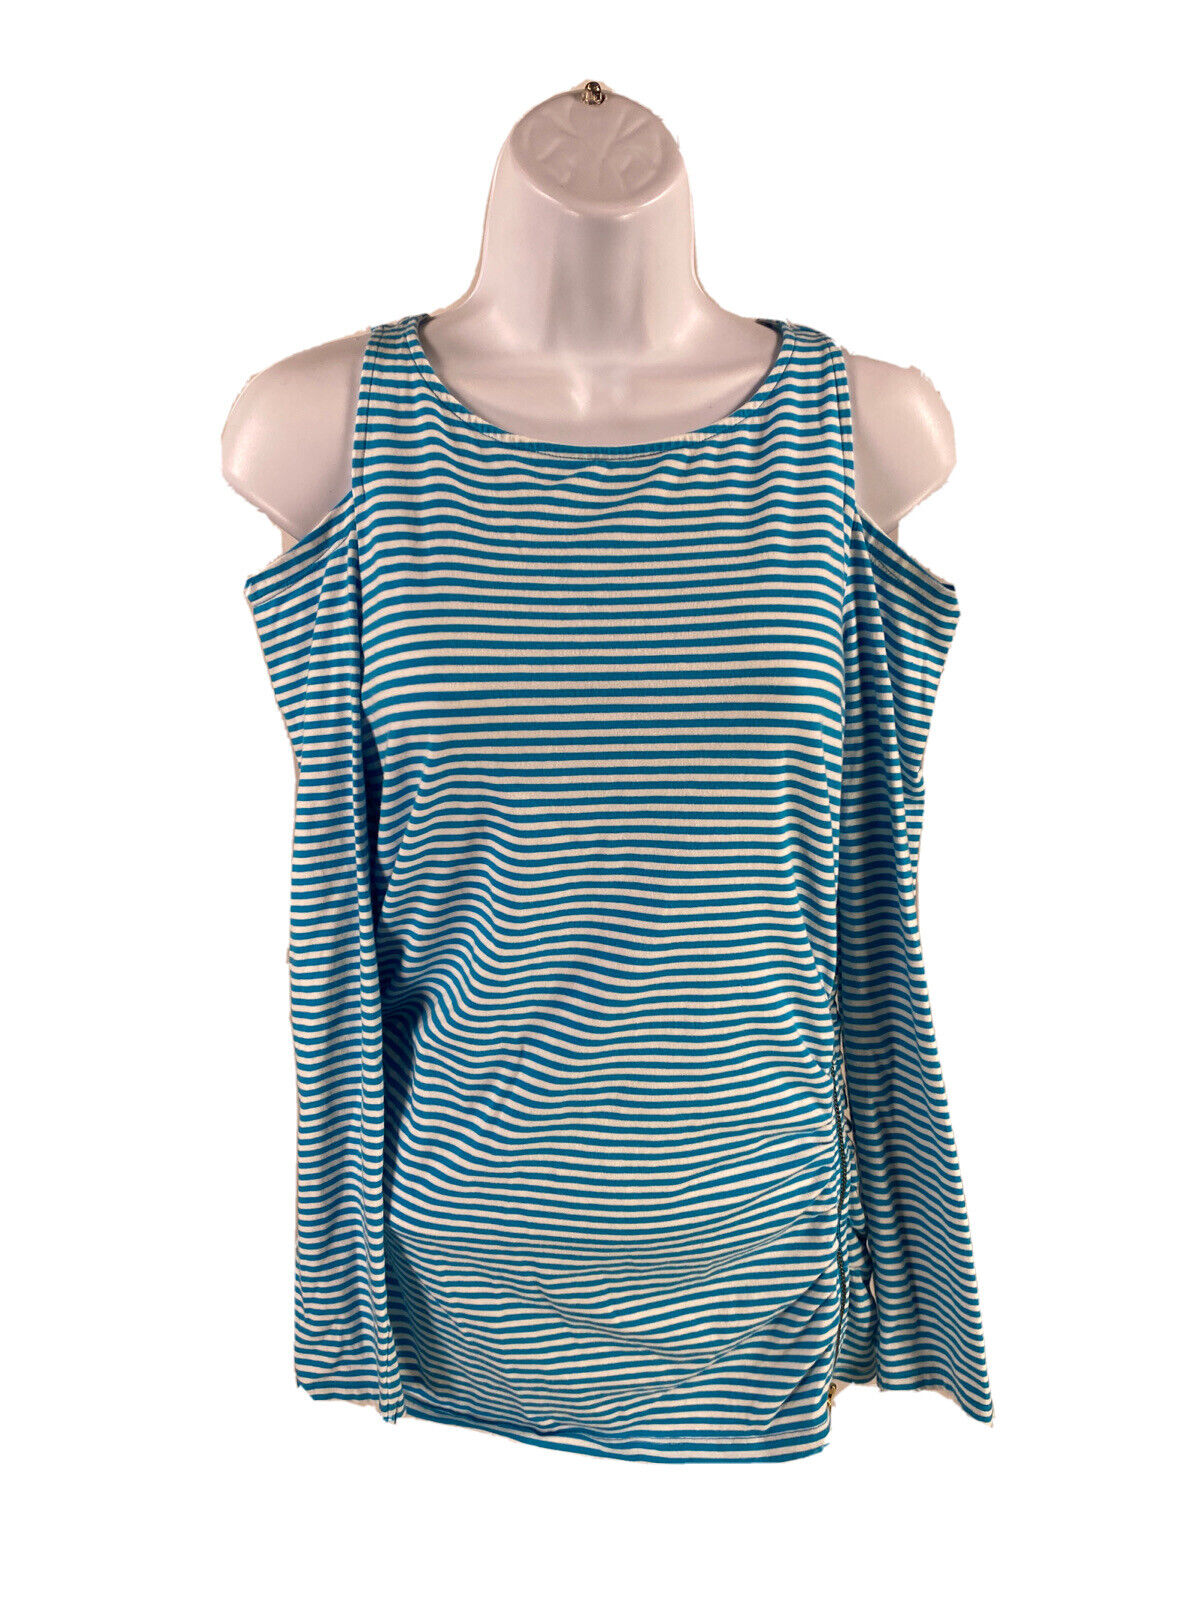 Michael Kors Women's Blue/White Striped Cold Shoulder Side Zip Shirt - S